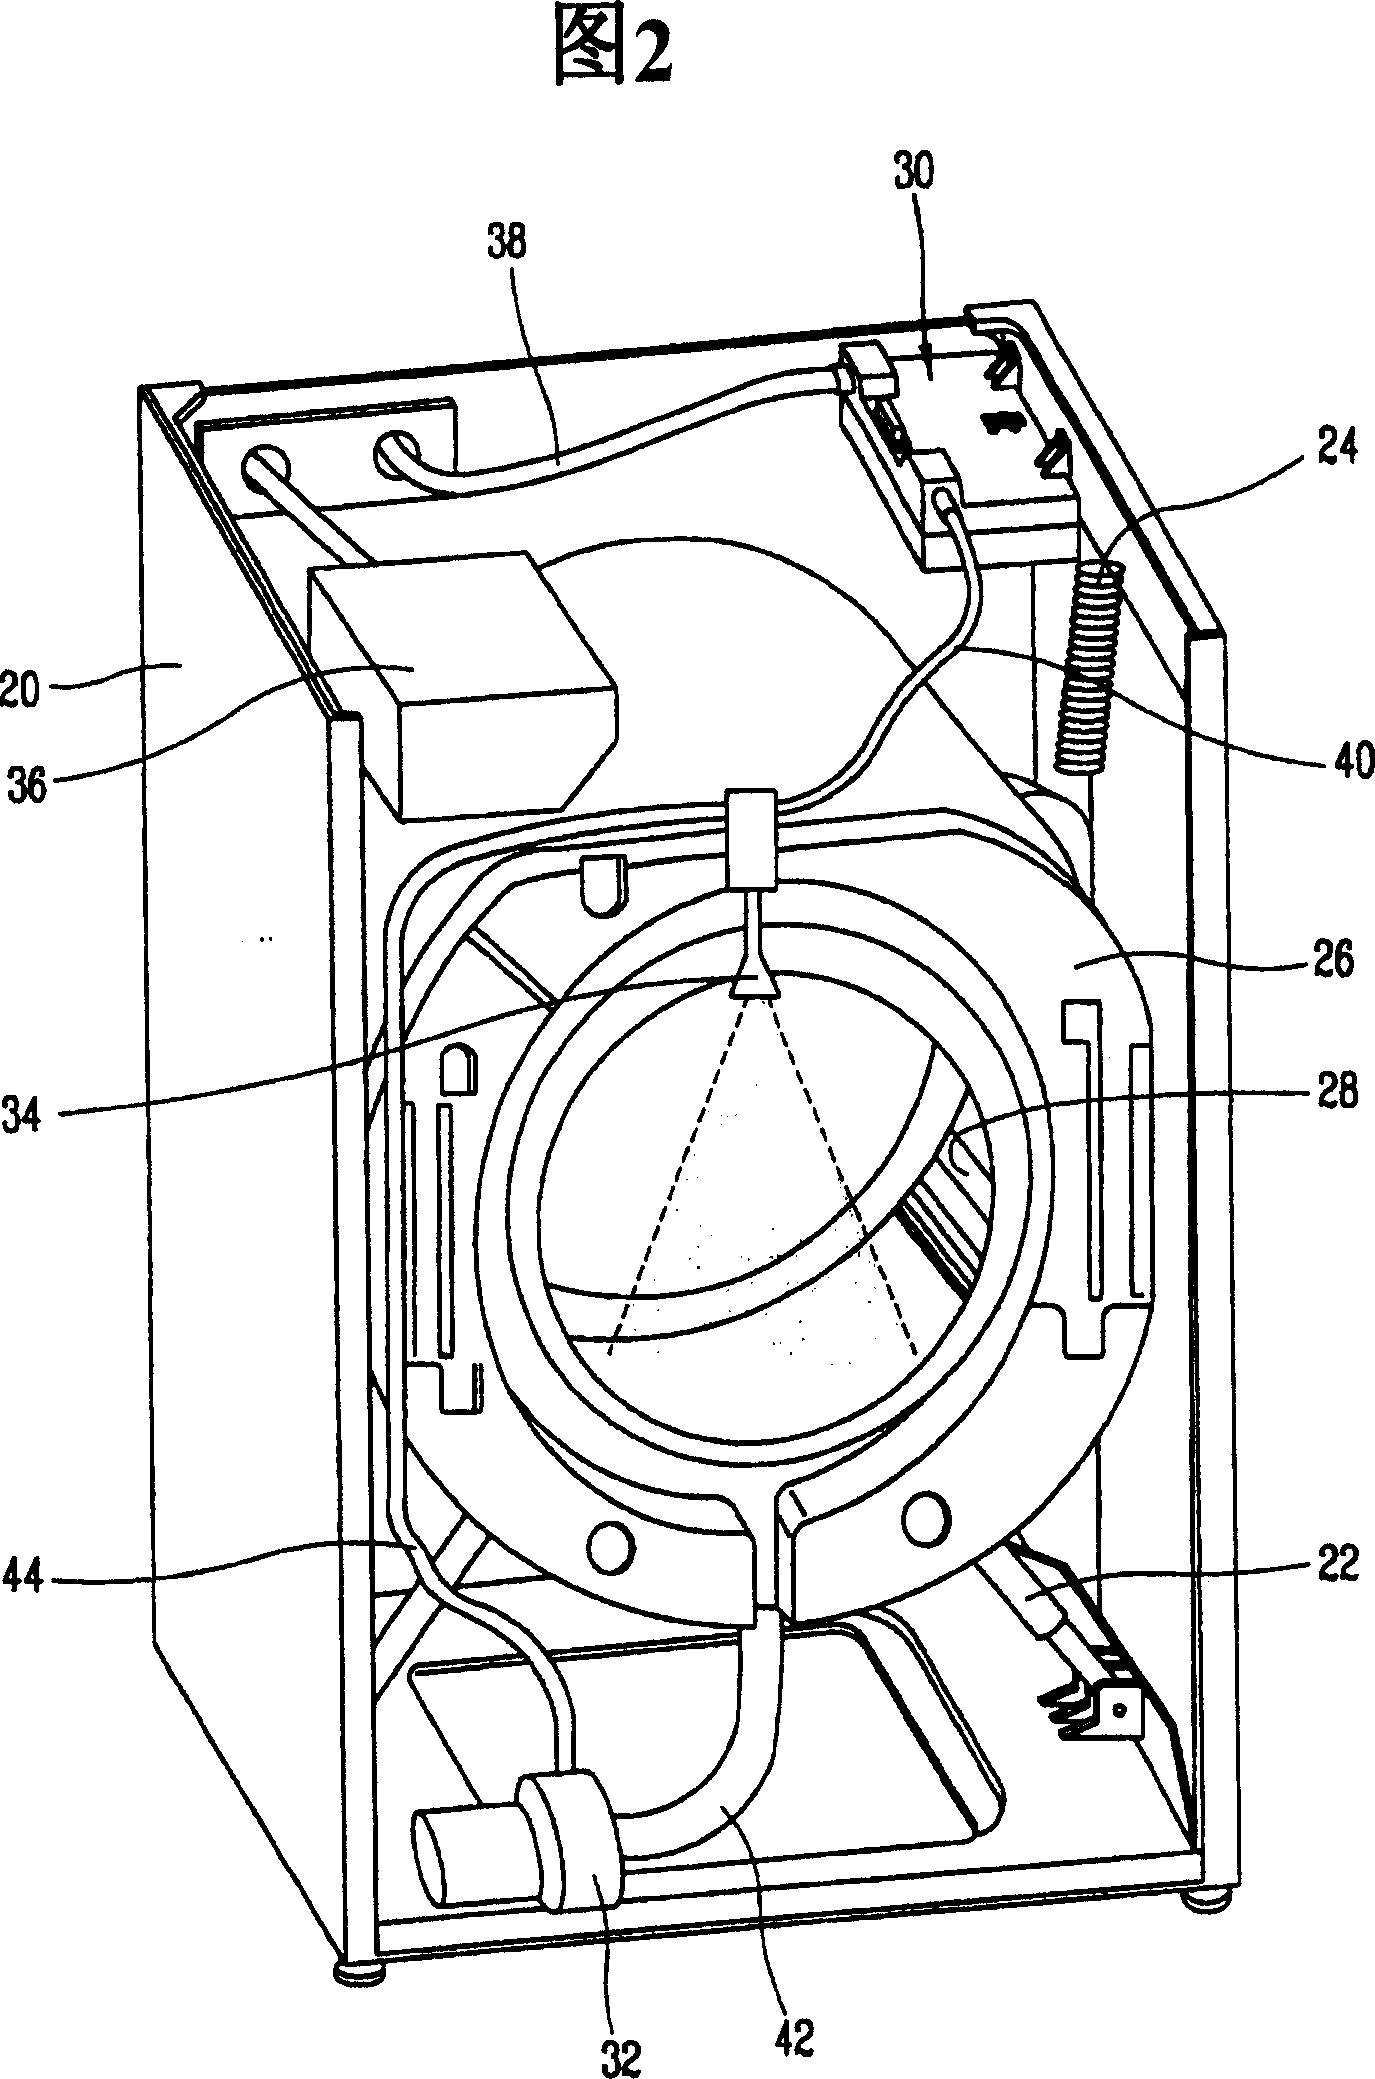 Steam generation apparatus for washing machine